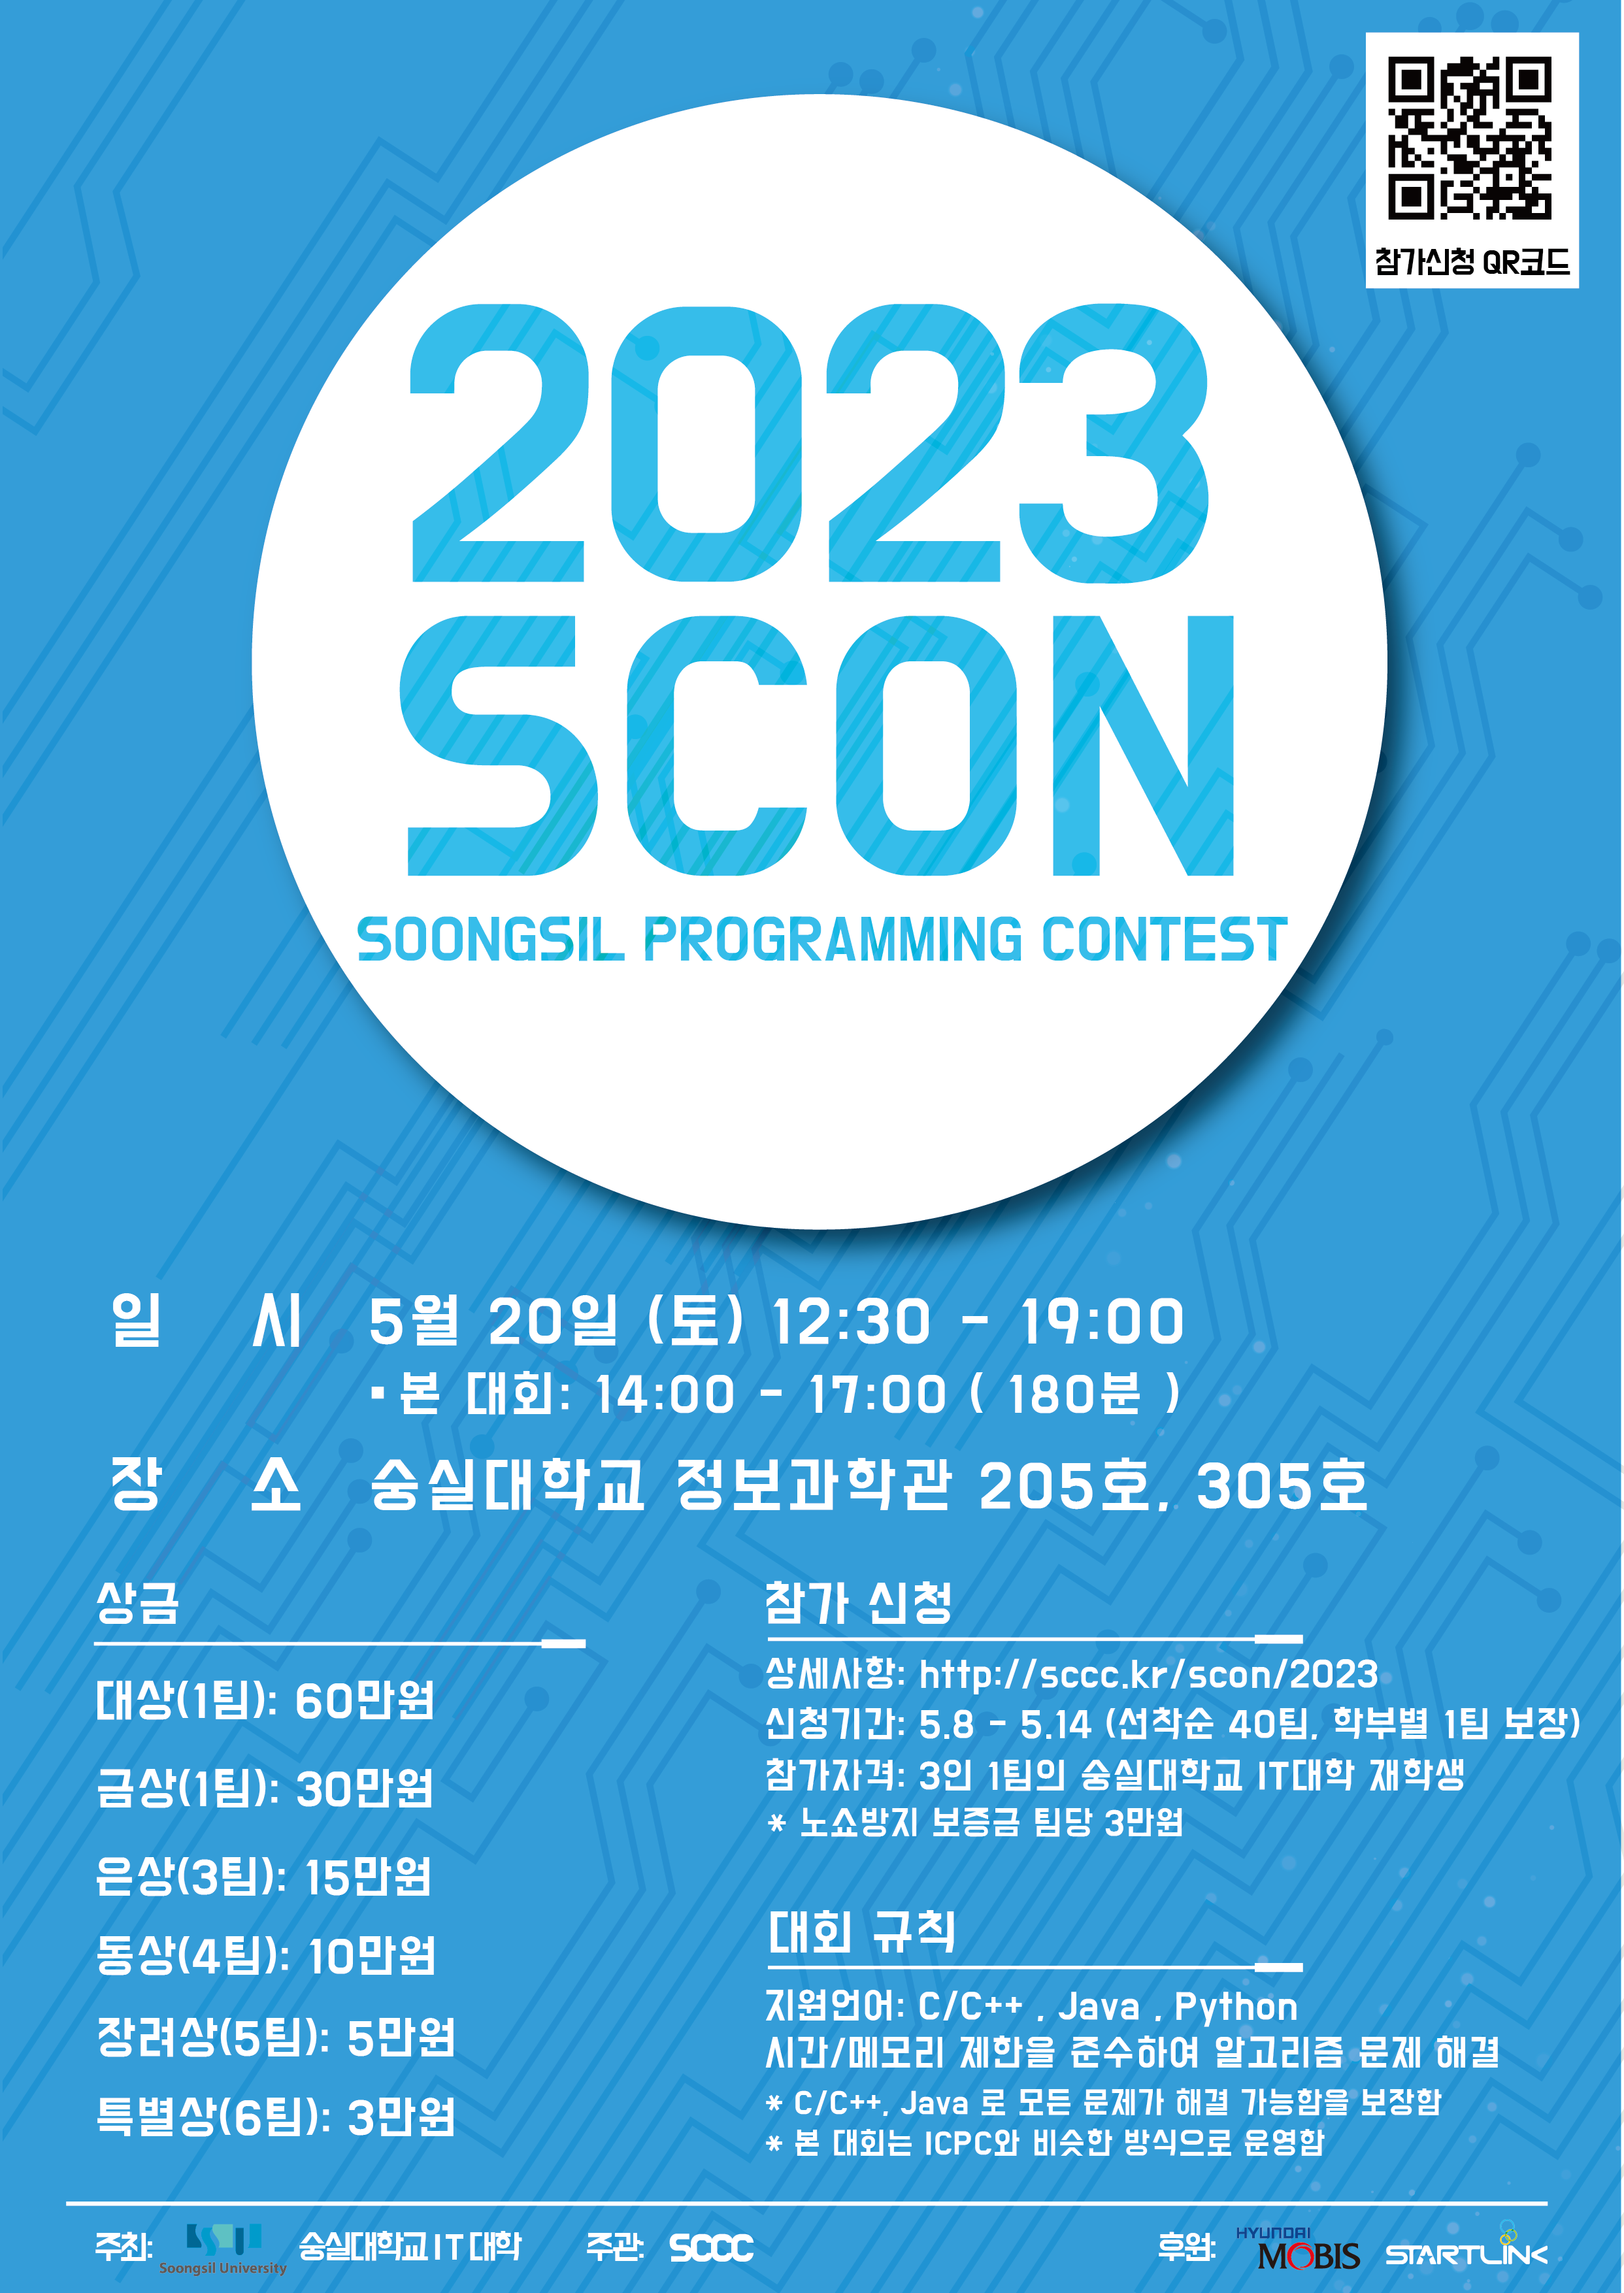 2023scon-poster